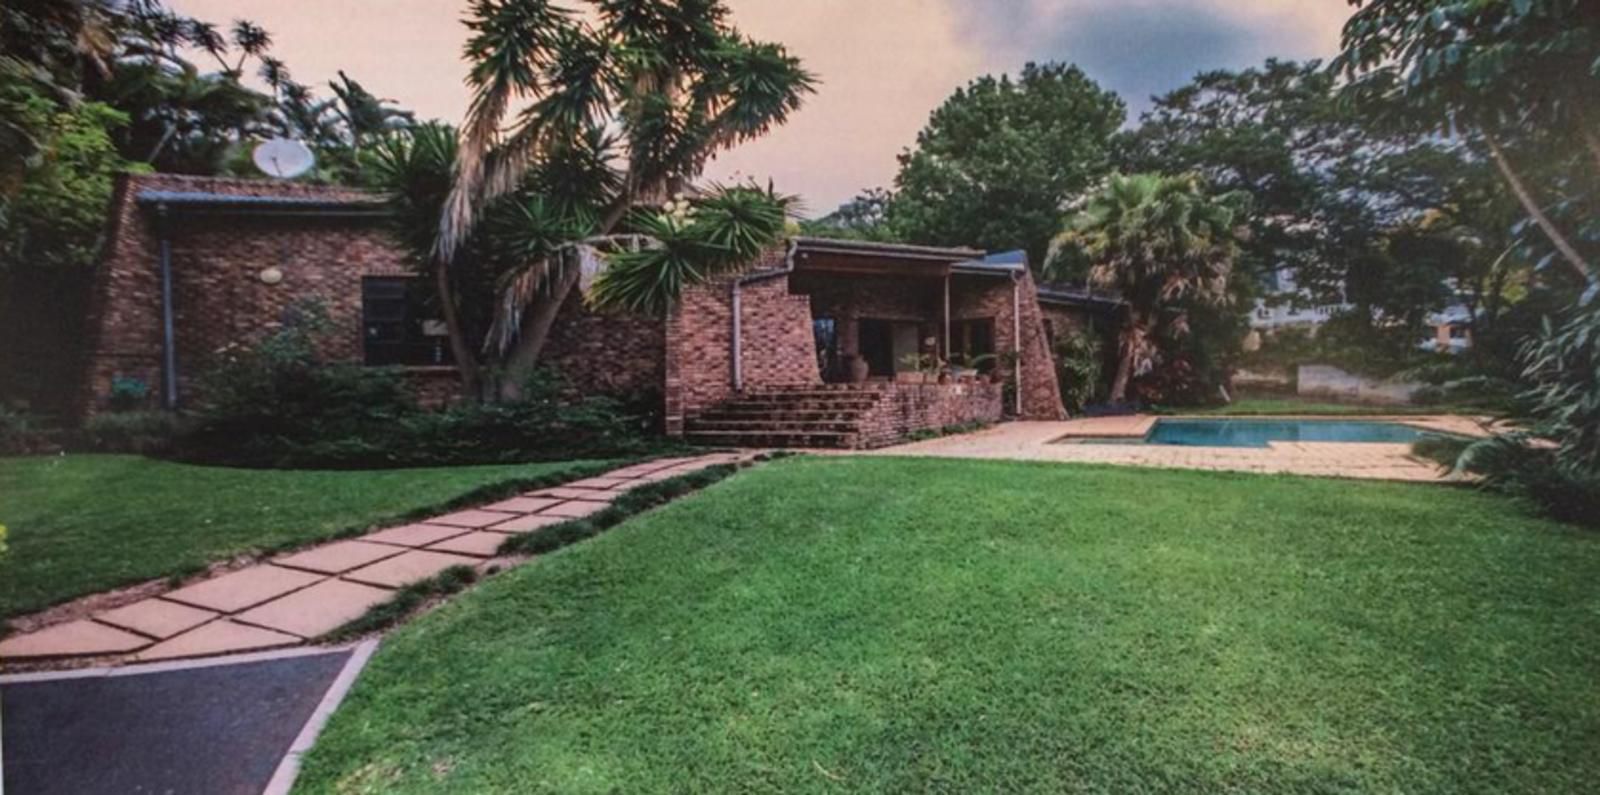 Faraway Lodge Bandb Westville Durban Kwazulu Natal South Africa House, Building, Architecture, Palm Tree, Plant, Nature, Wood, Garden